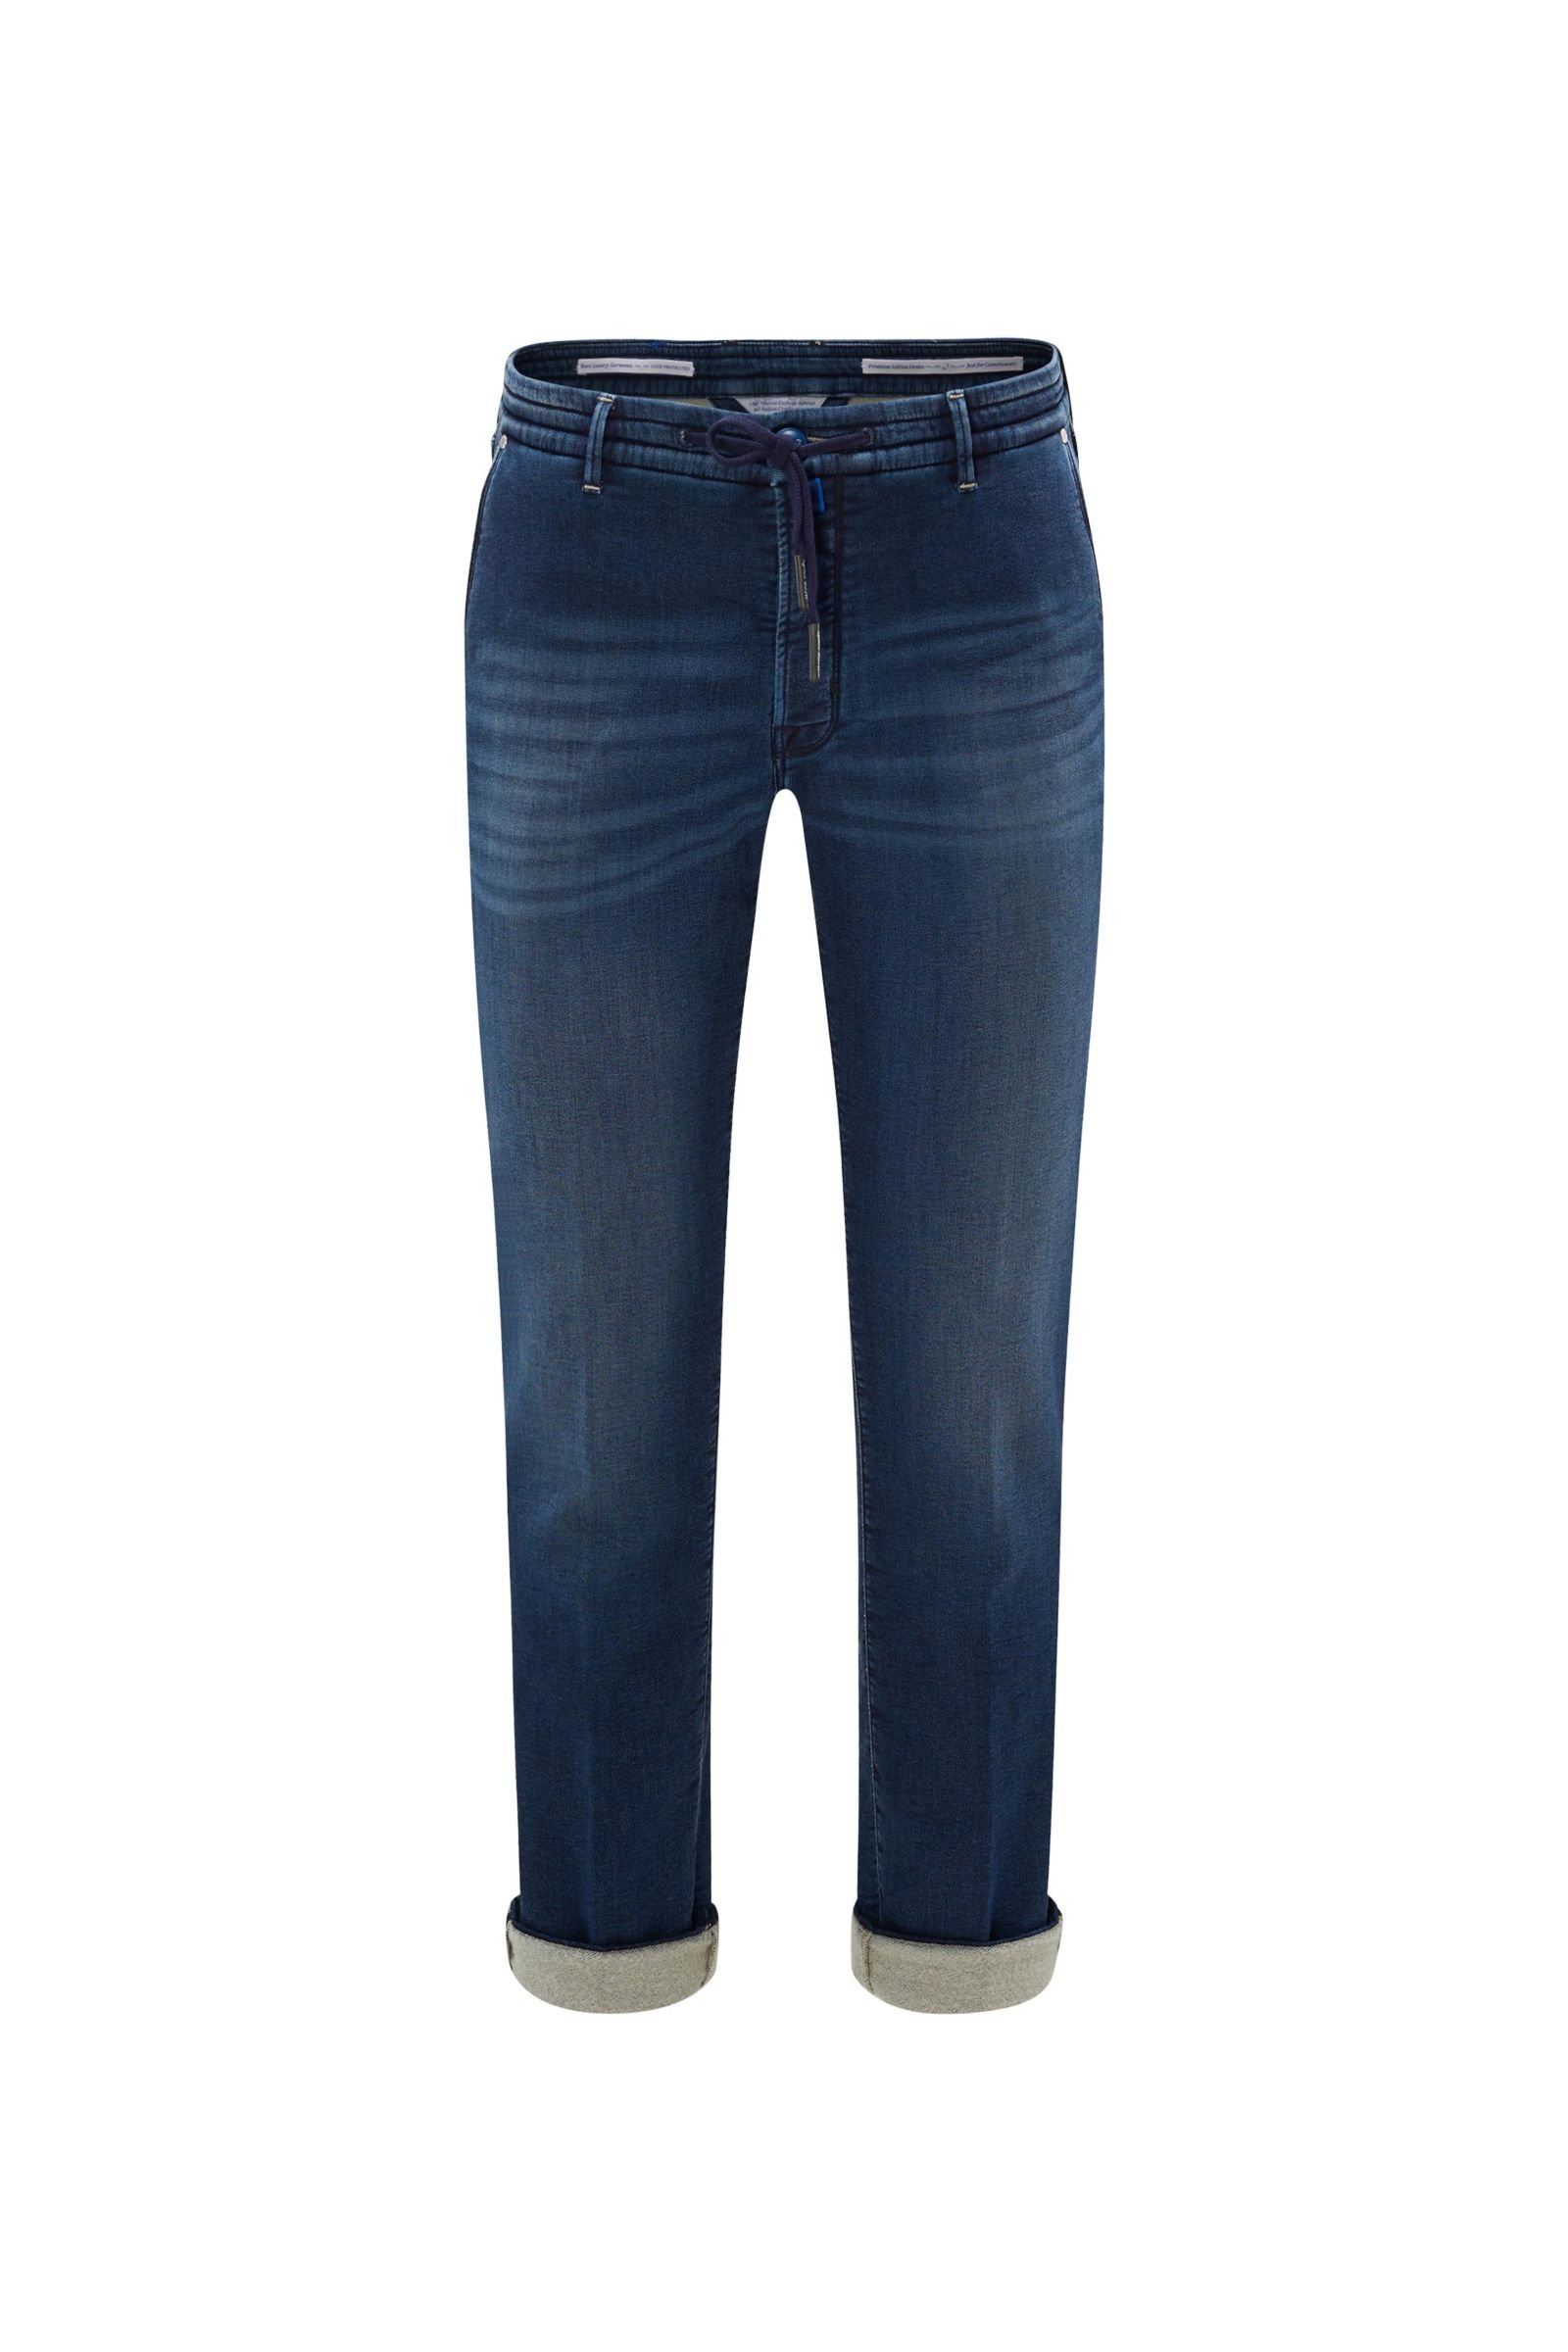 Jeans-Joggpants 'J676 Relax Comfort Slim Fit' dunkelblau